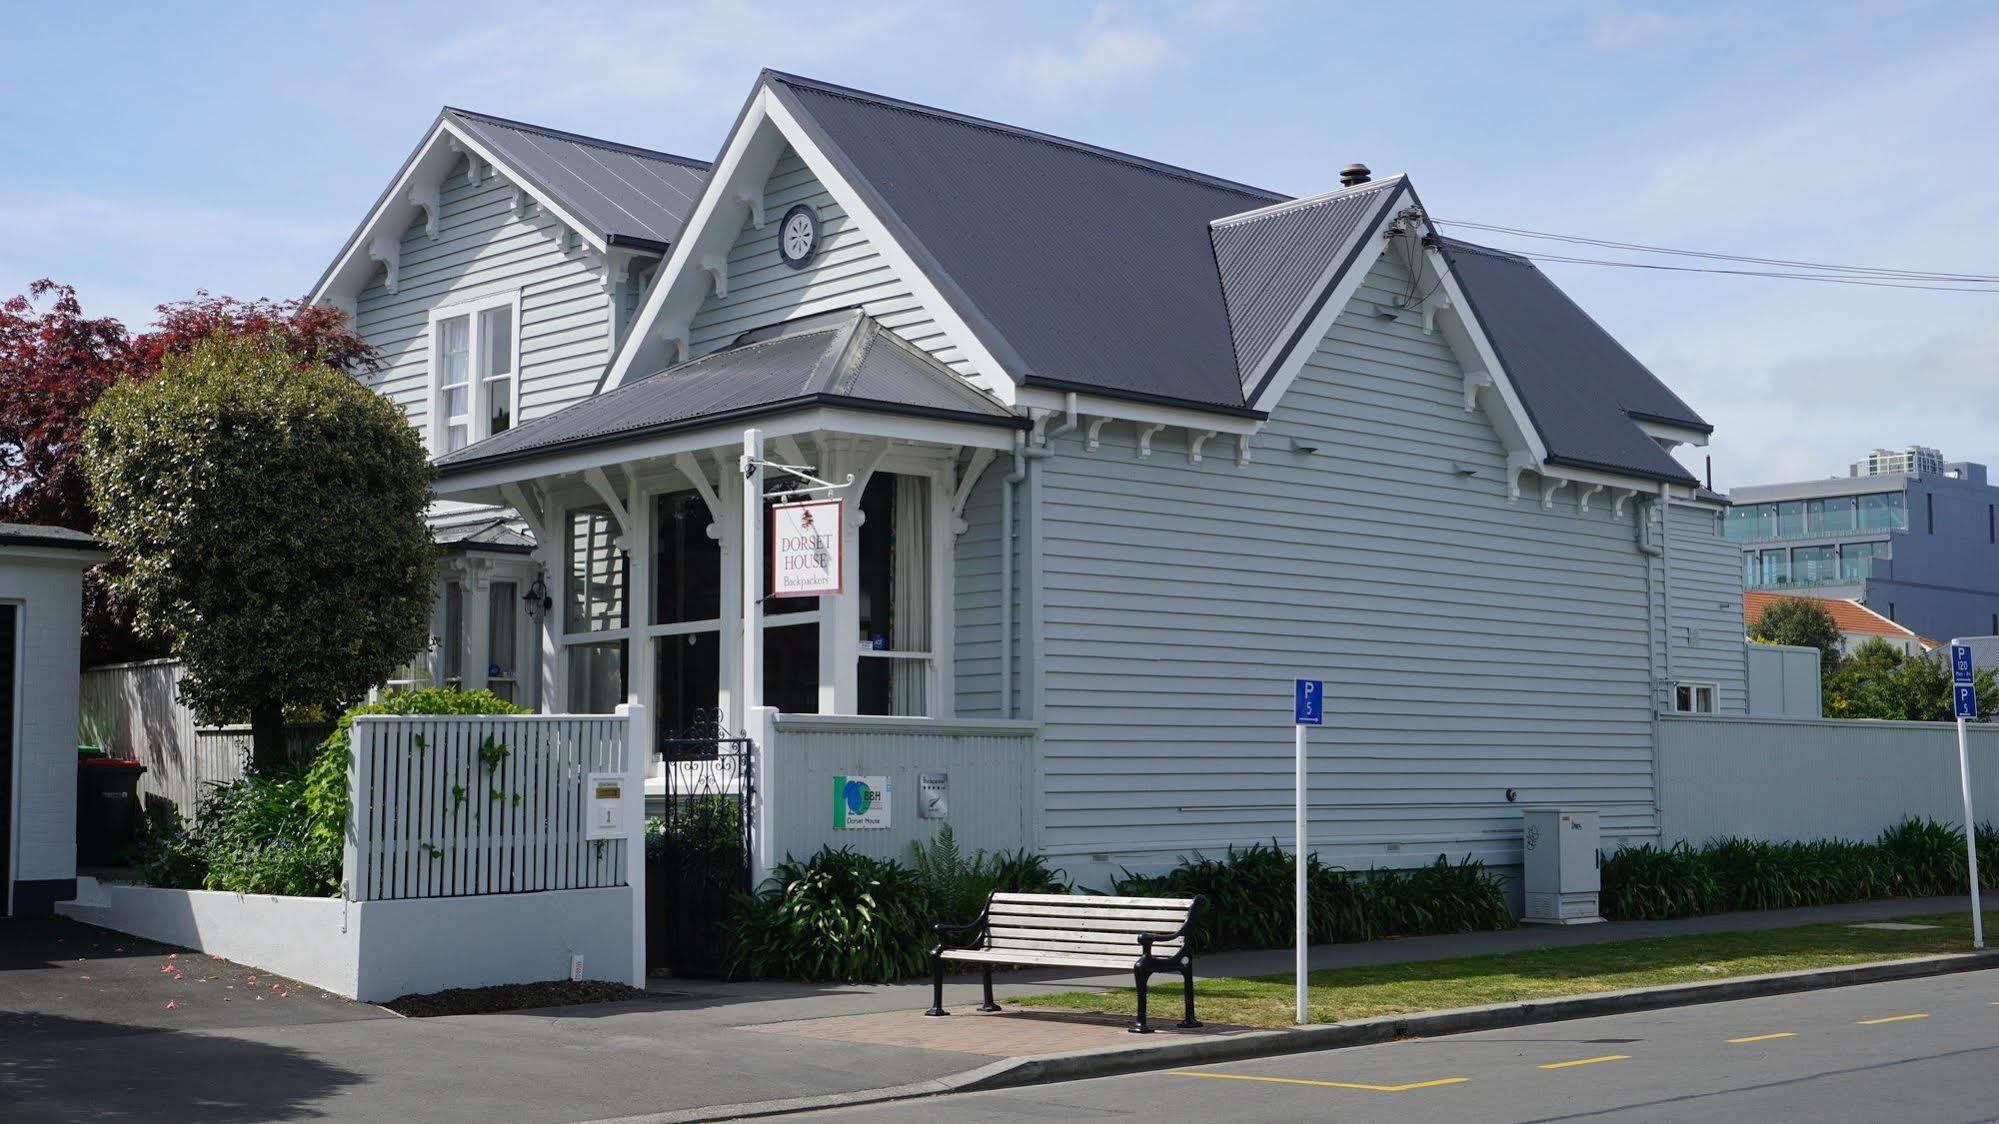 Dorset House Backpackers Hostel Christchurch Exterior foto